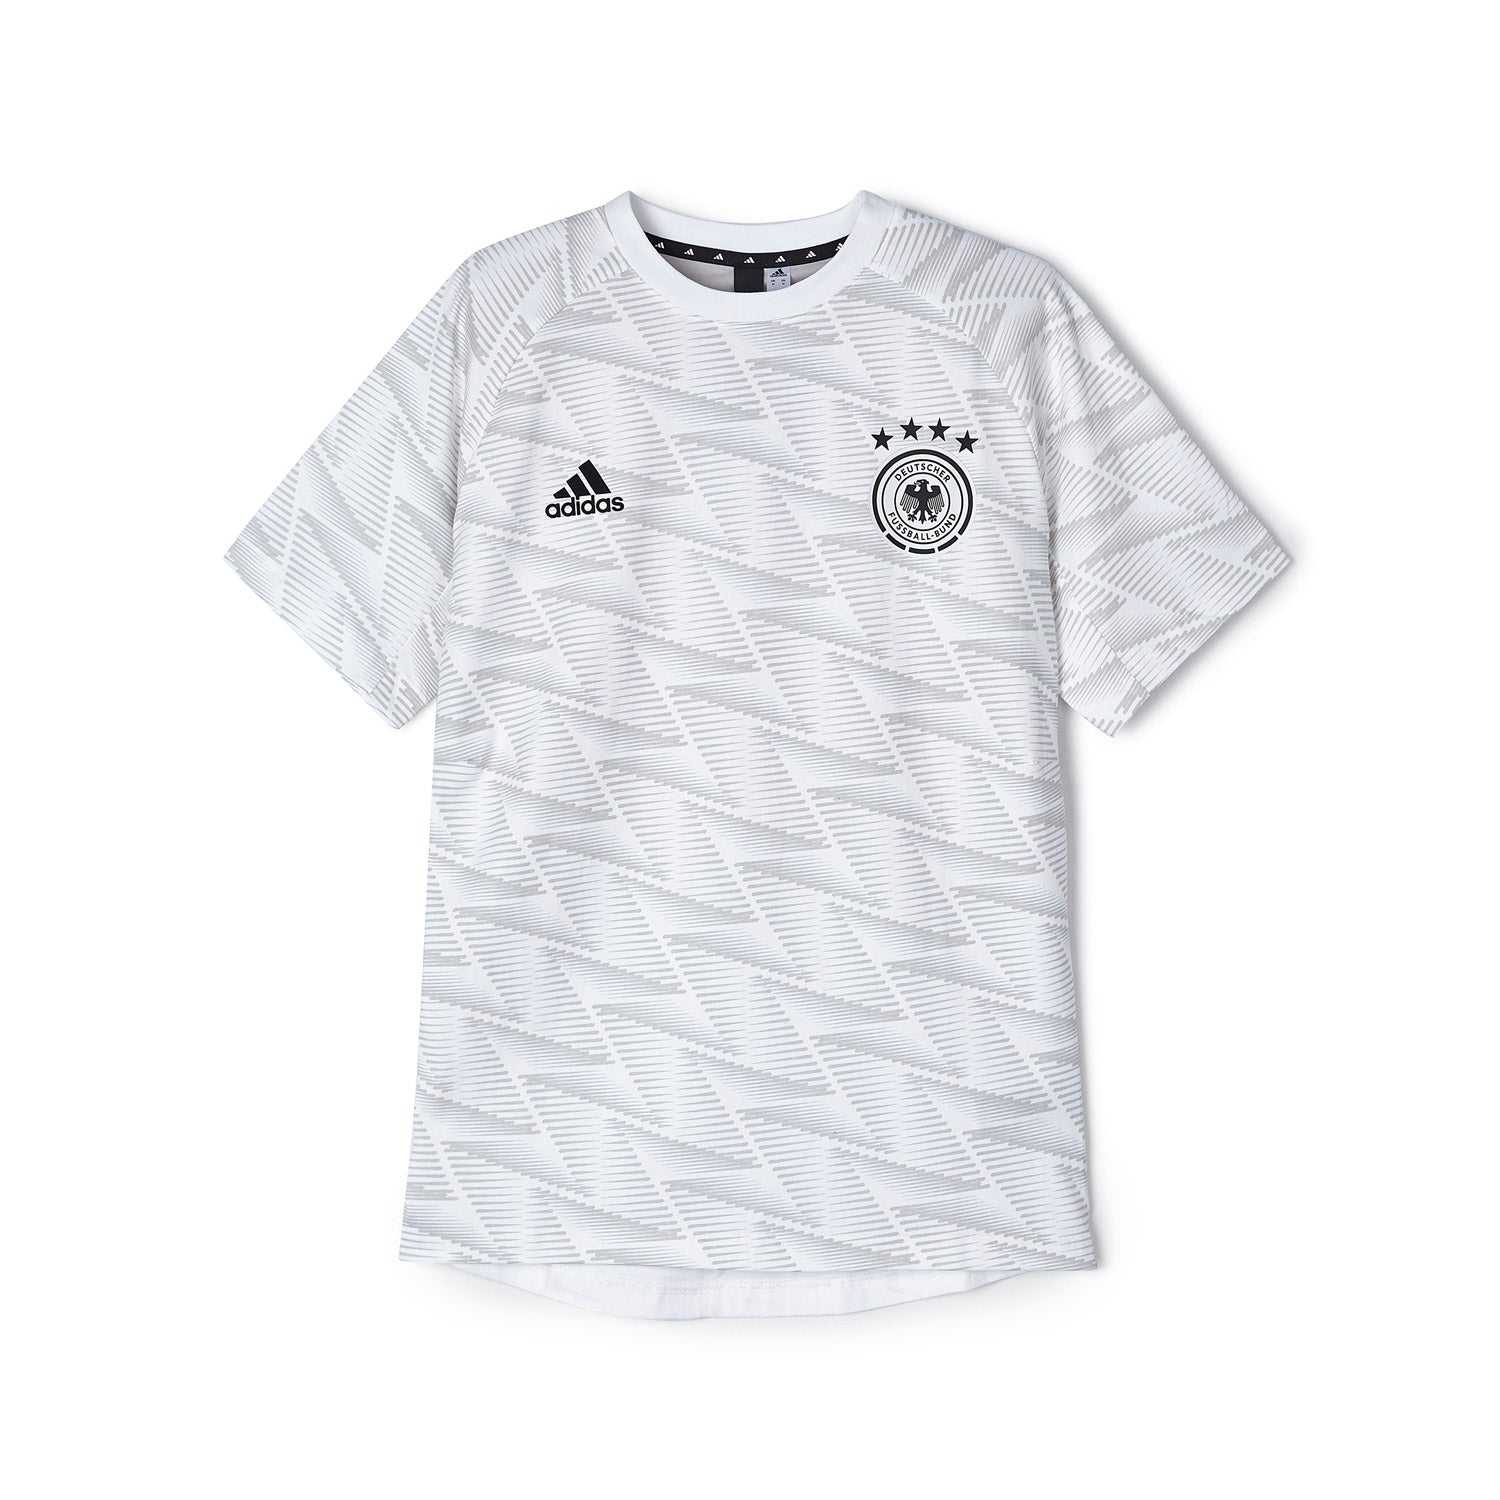 adidas Germany Tournament Warm up Shirt - Men's